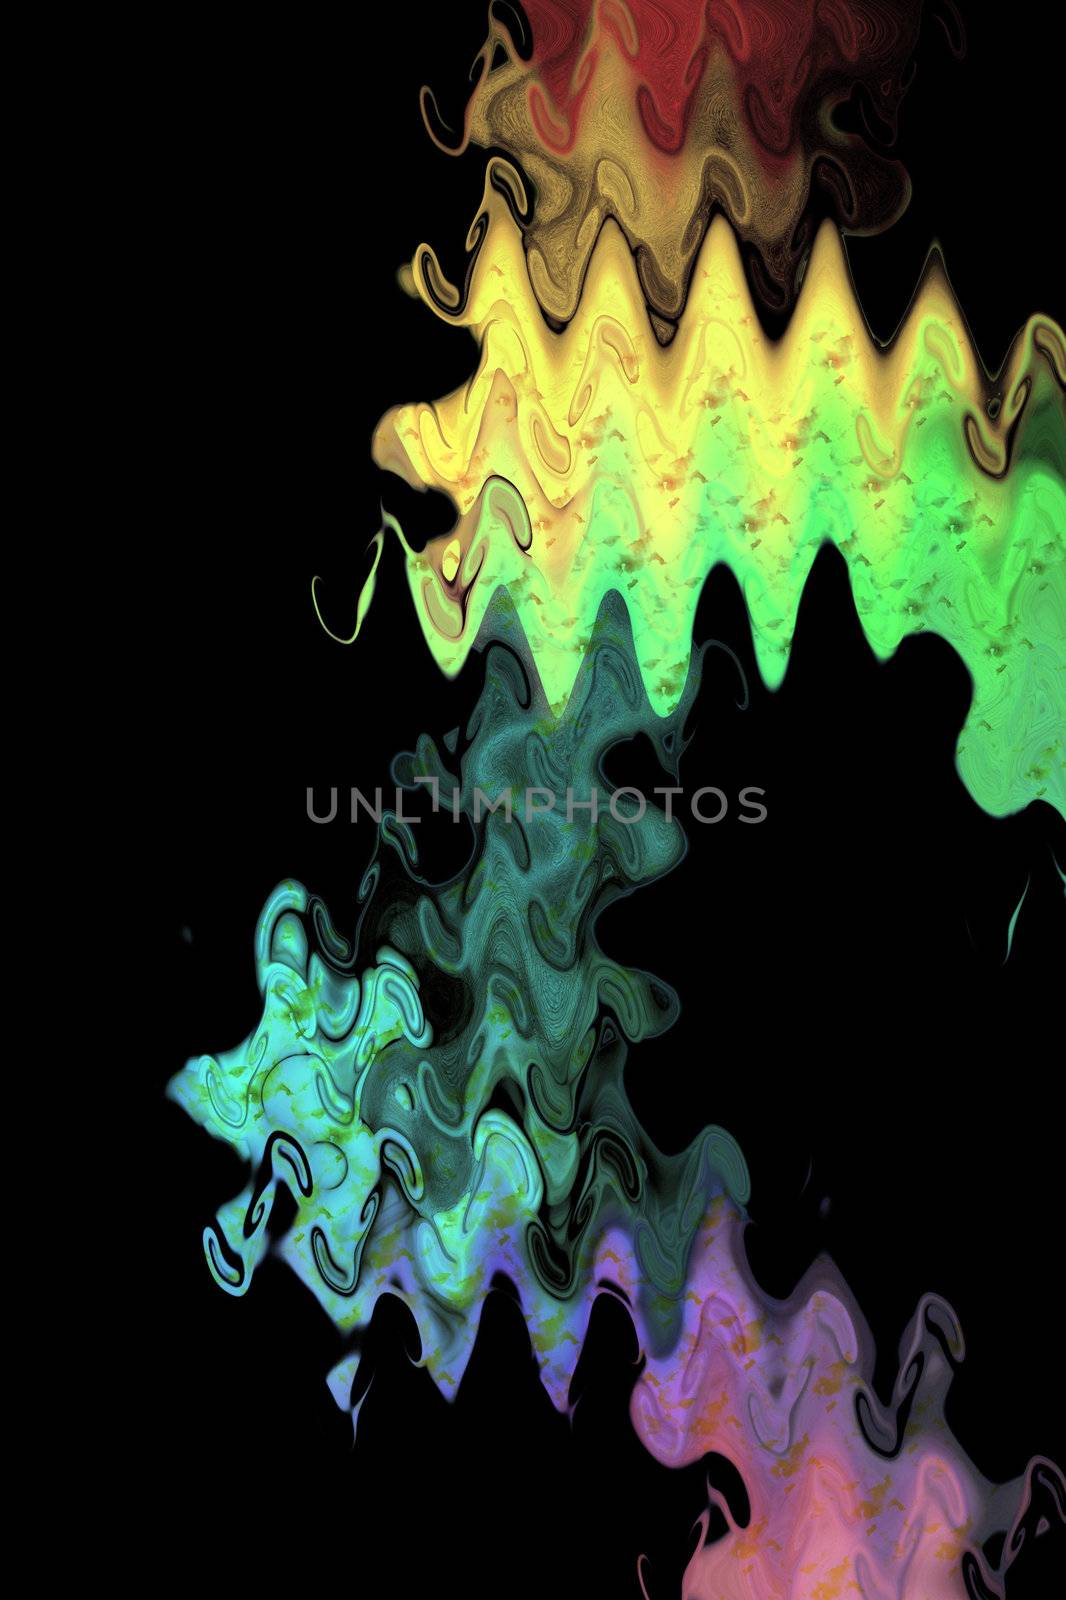 spectrum background with rainbow effects running through 